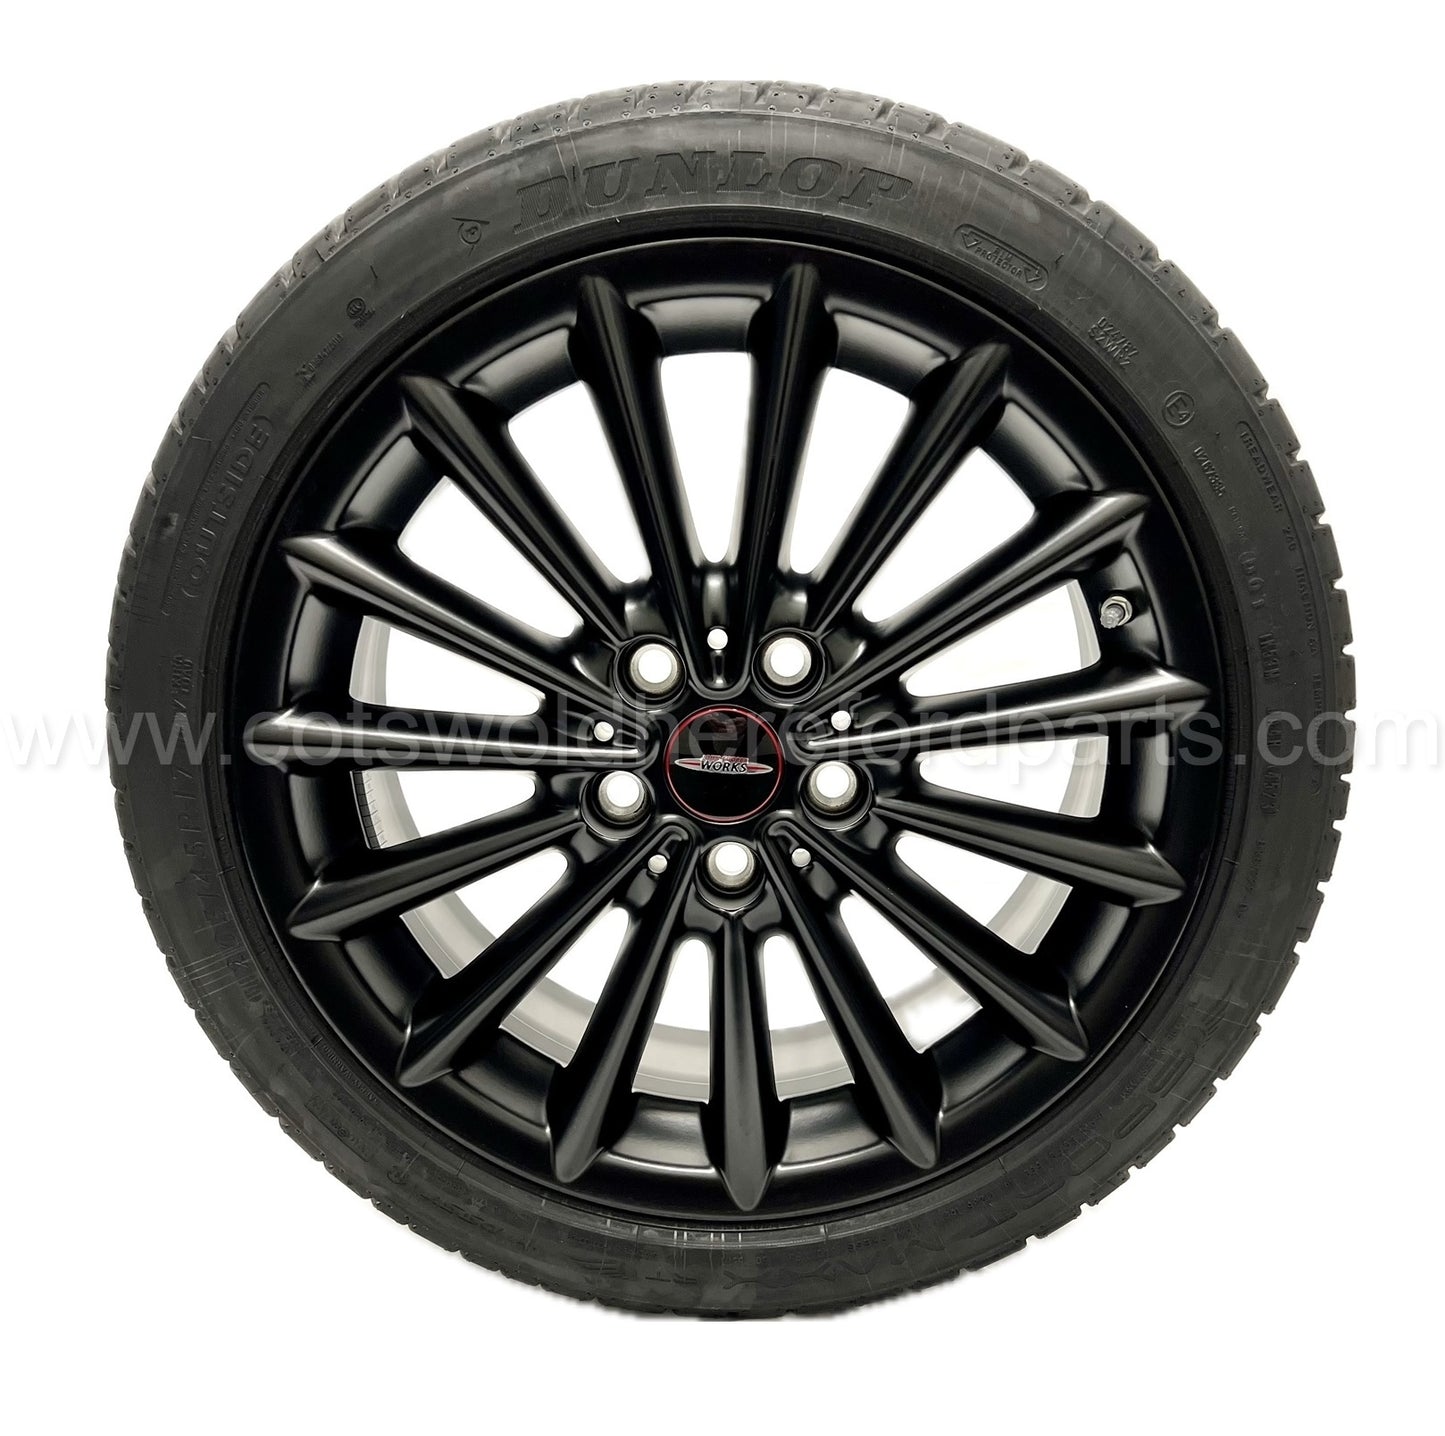 Genuine MINI RDC JCW 17" Wheel And Tyre Set Matt Black 36112459604